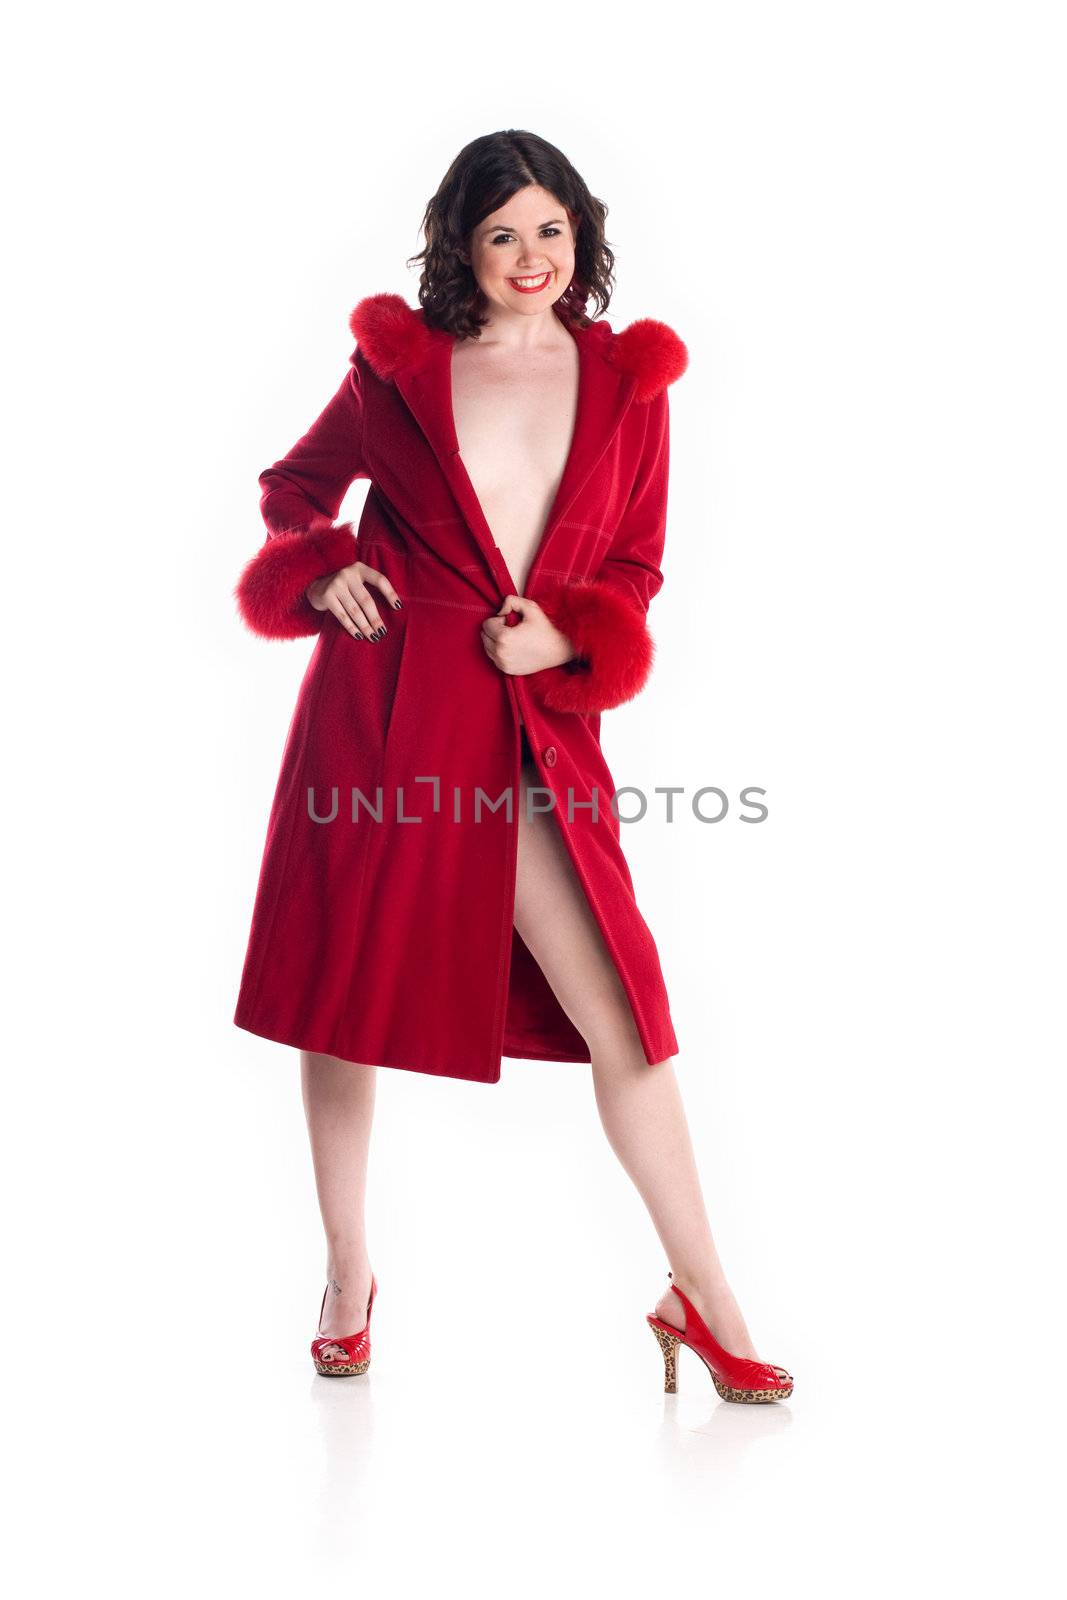 cute girl in pin-up pose in red coat